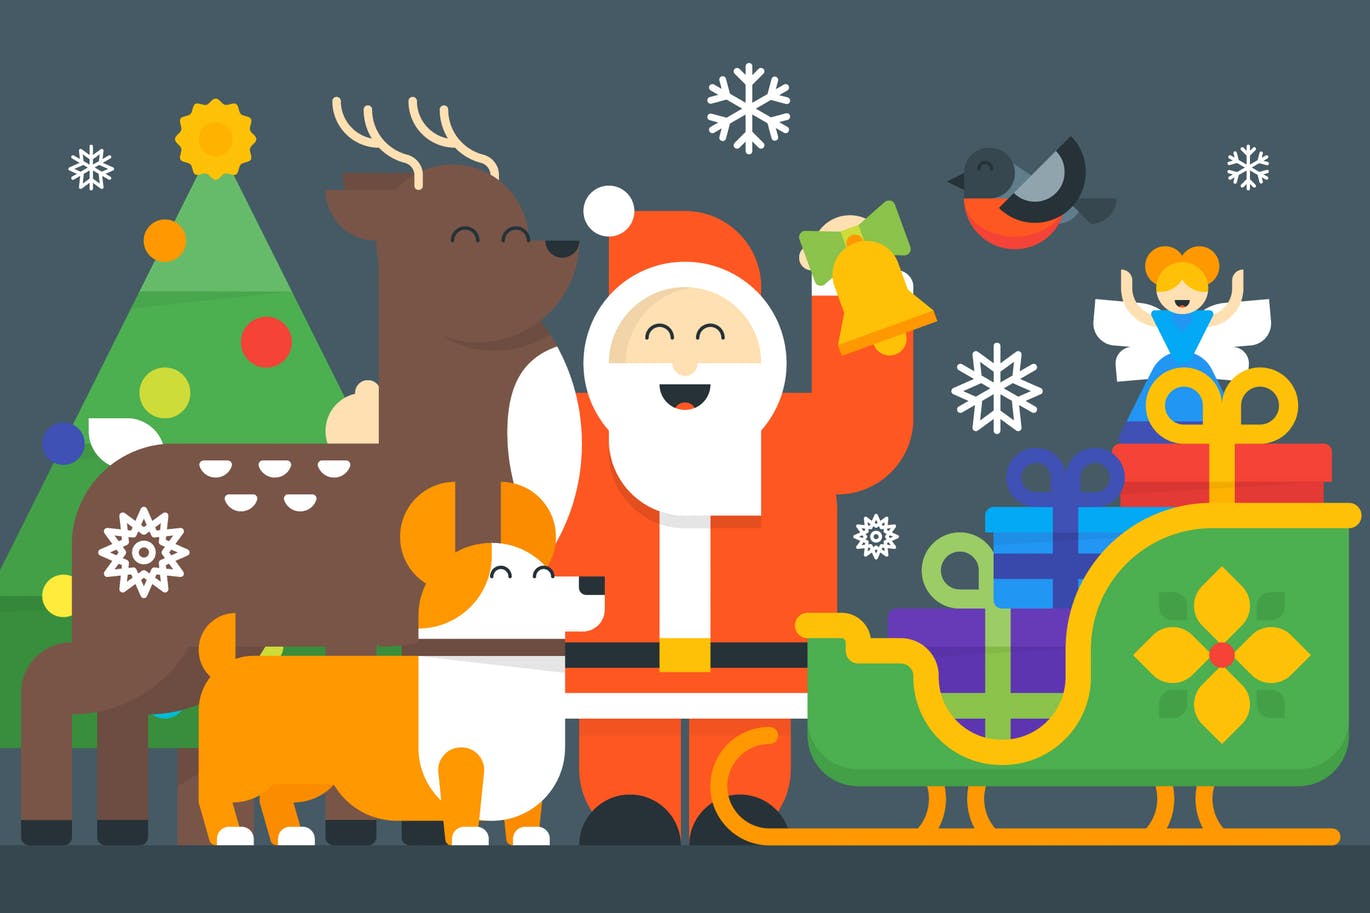 圣诞节&新年庆祝主题矢量插画素材 Christmas & New Year Illustrations插图